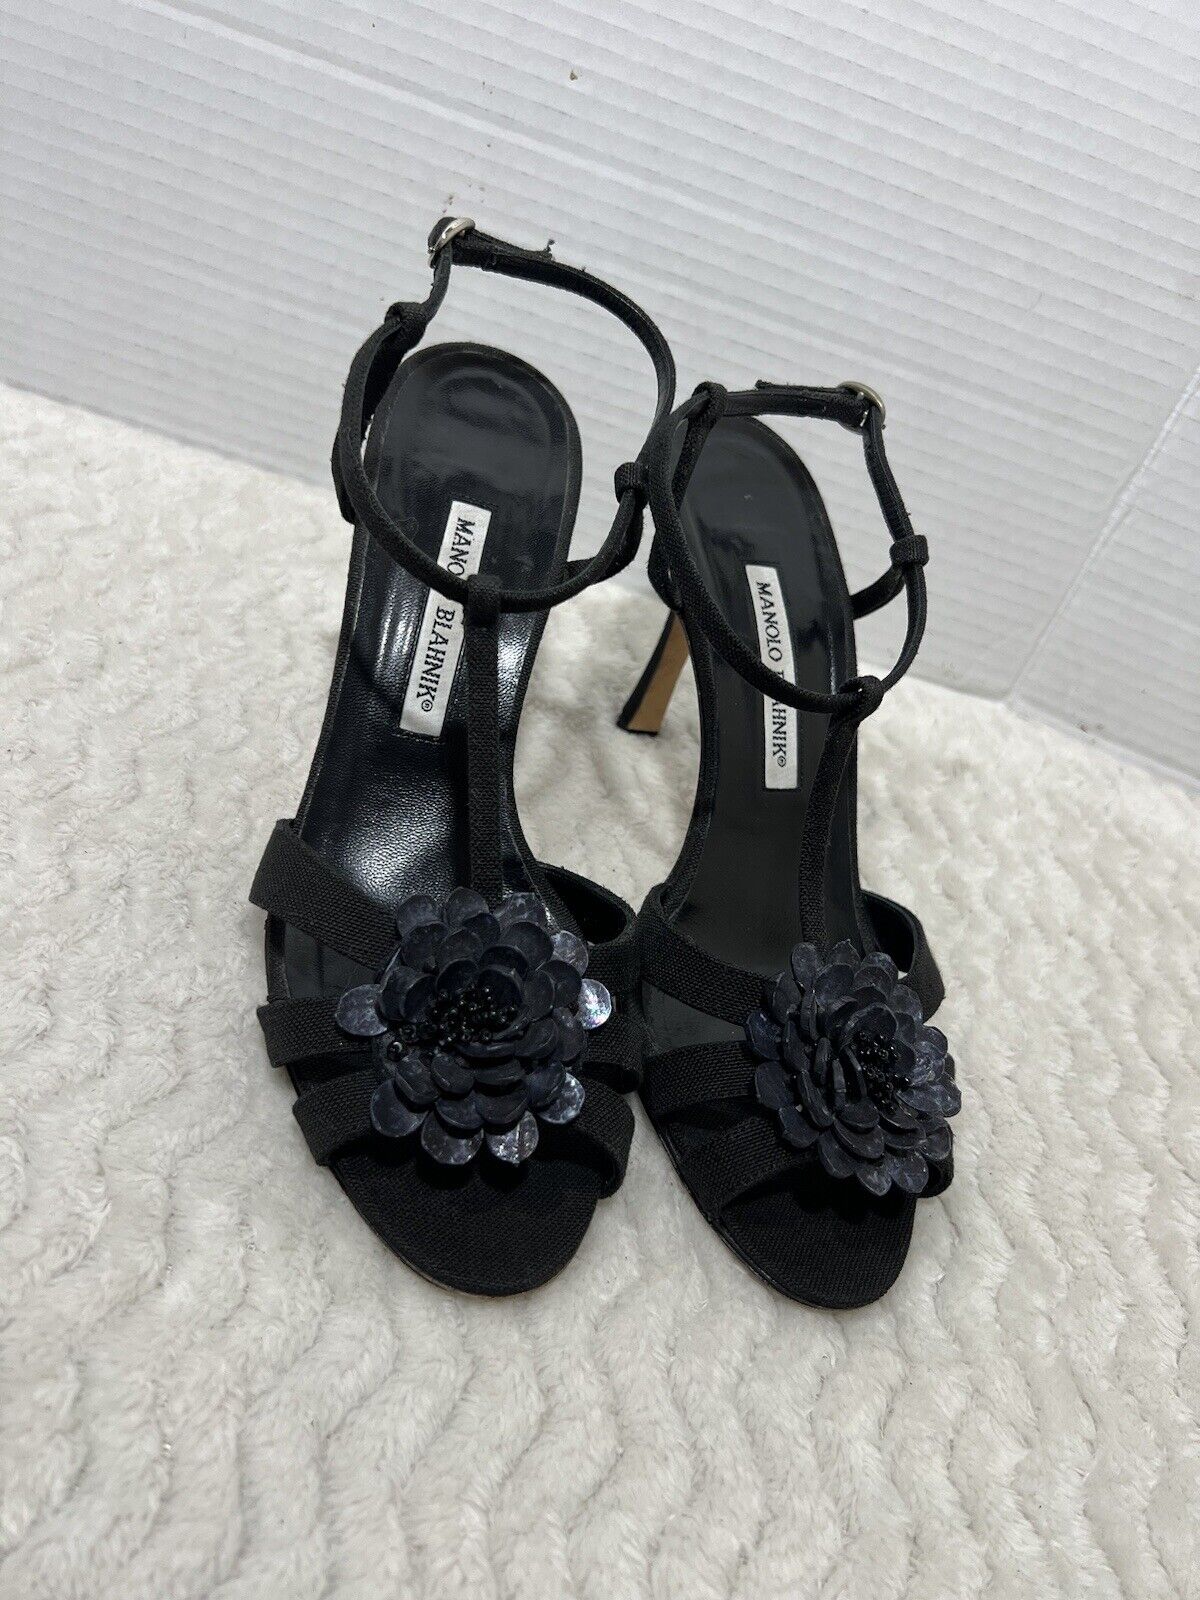 Manolo Blahnik Women’s 38.5 US 8 Black Floral Applique T Strap Stiletto Heels